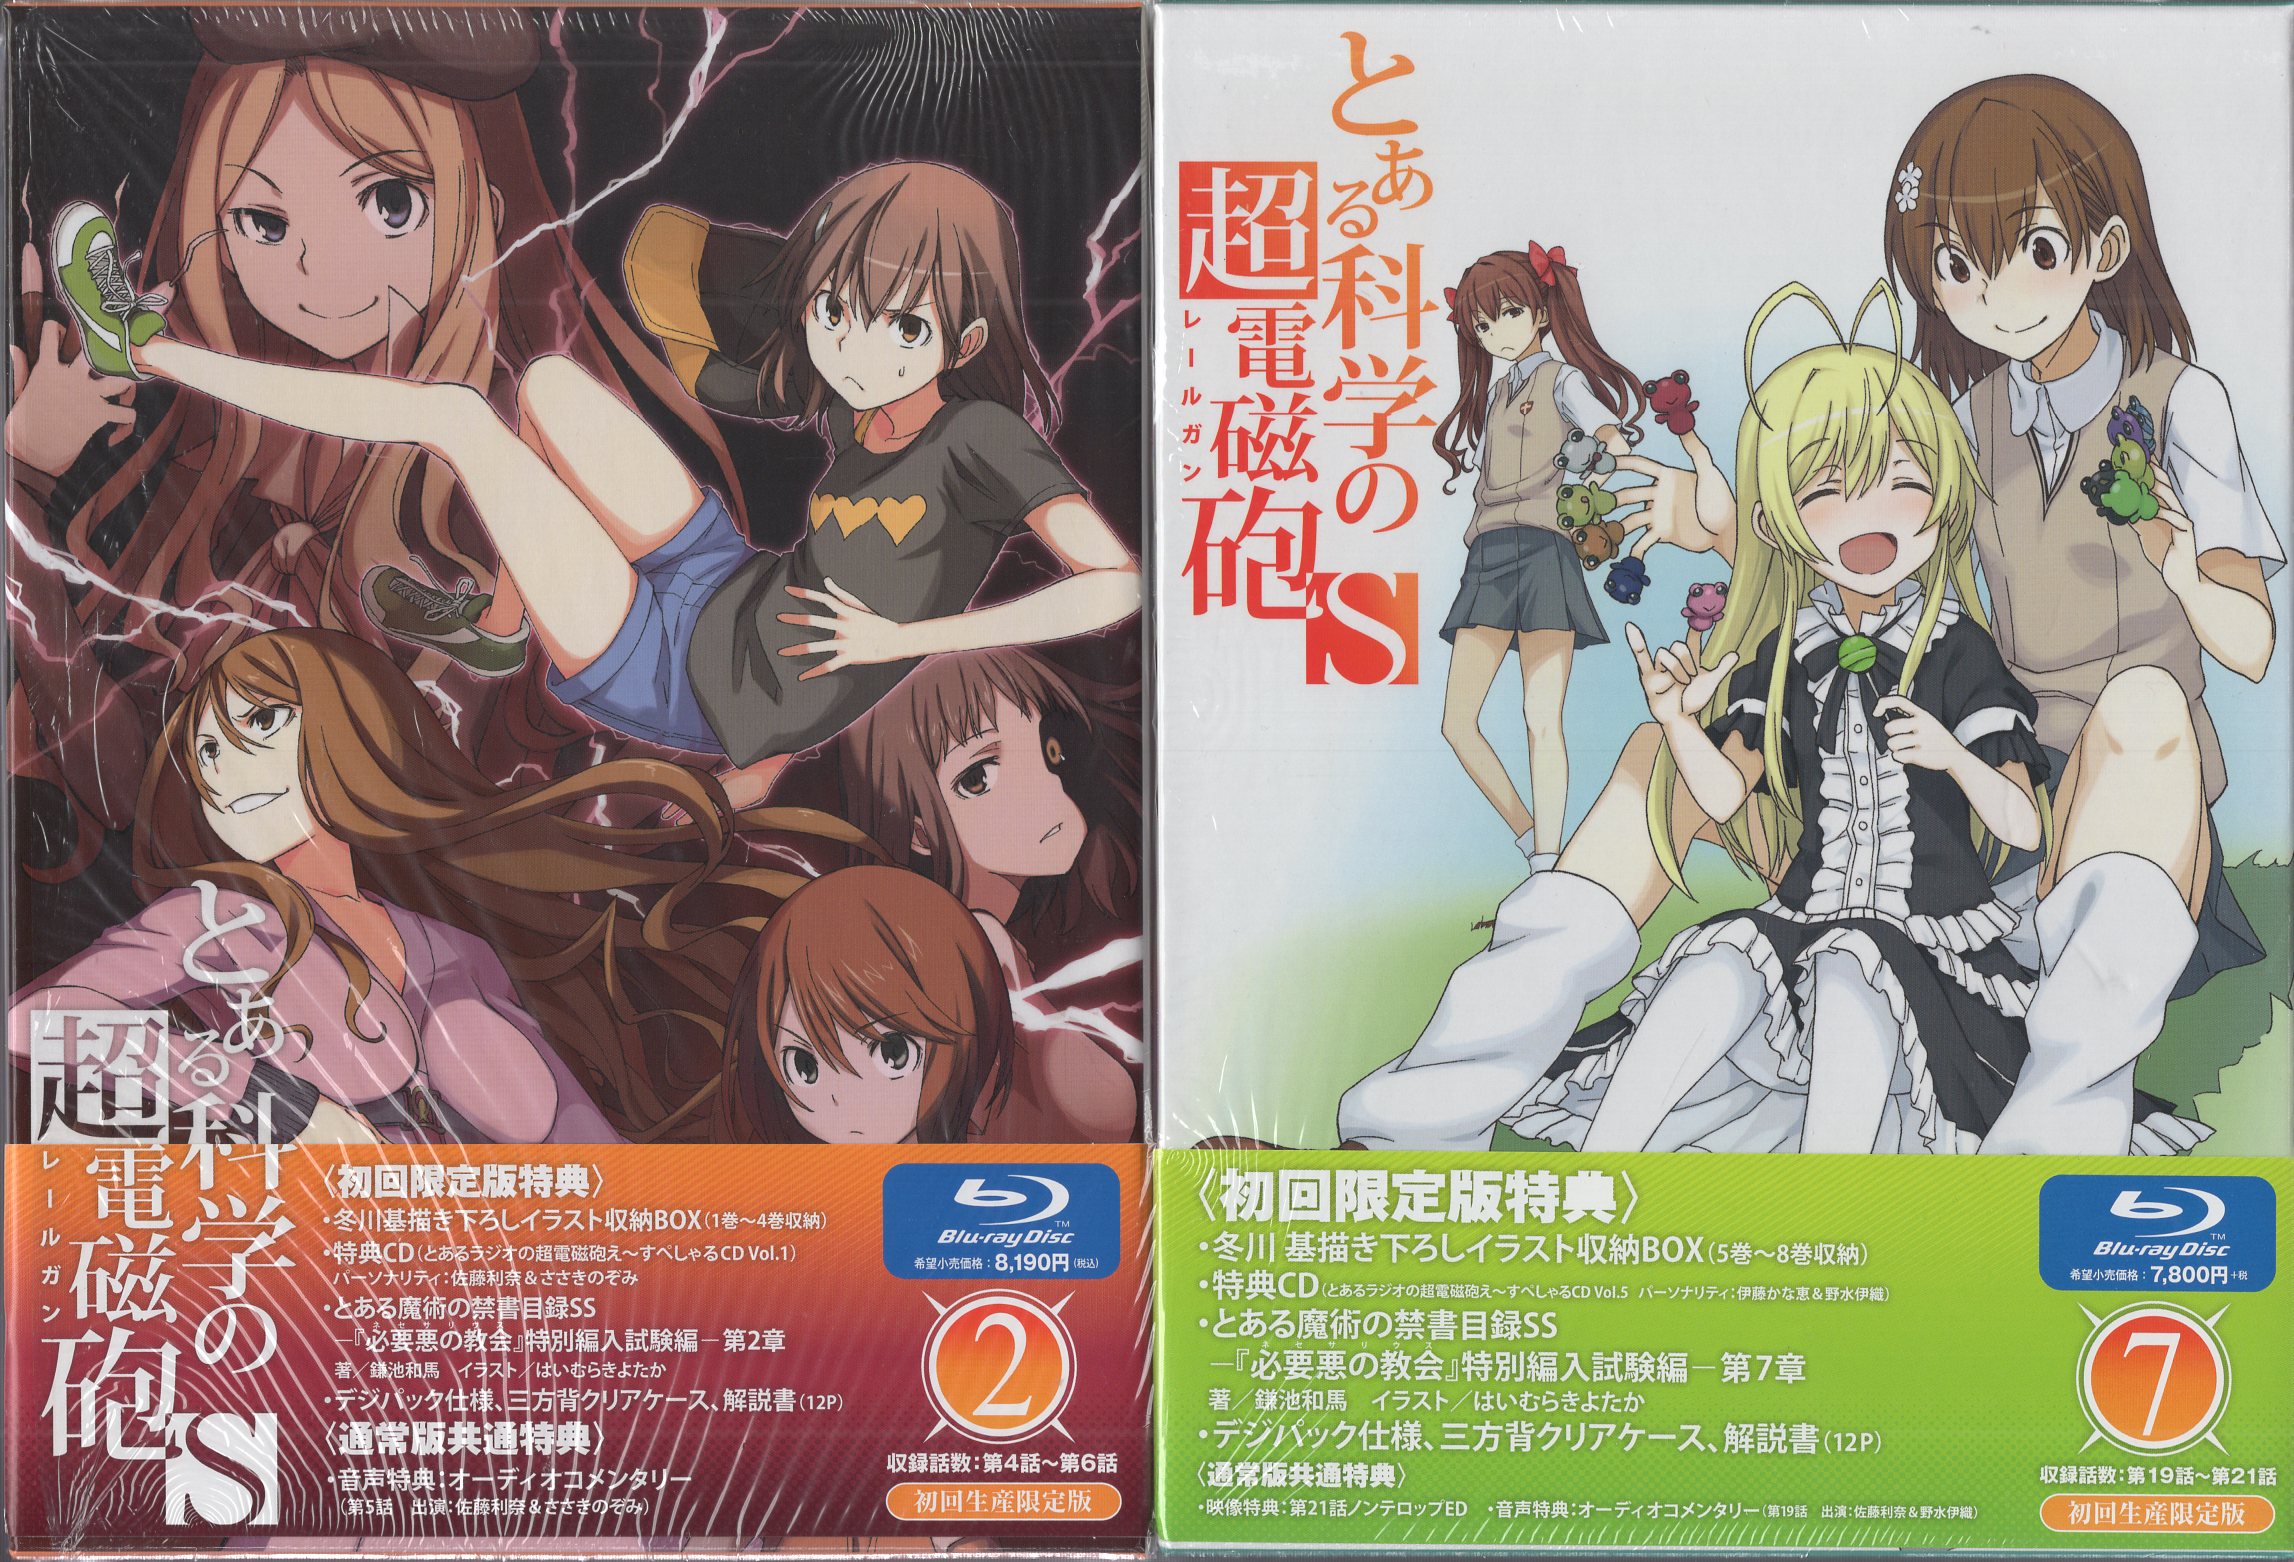 Geneon Universal Entertainment Anime Blu-Ray A Certain Scientific Railgun-S  First Release Limited Edition Complete 8 Volume Set | Mandarake Online Shop